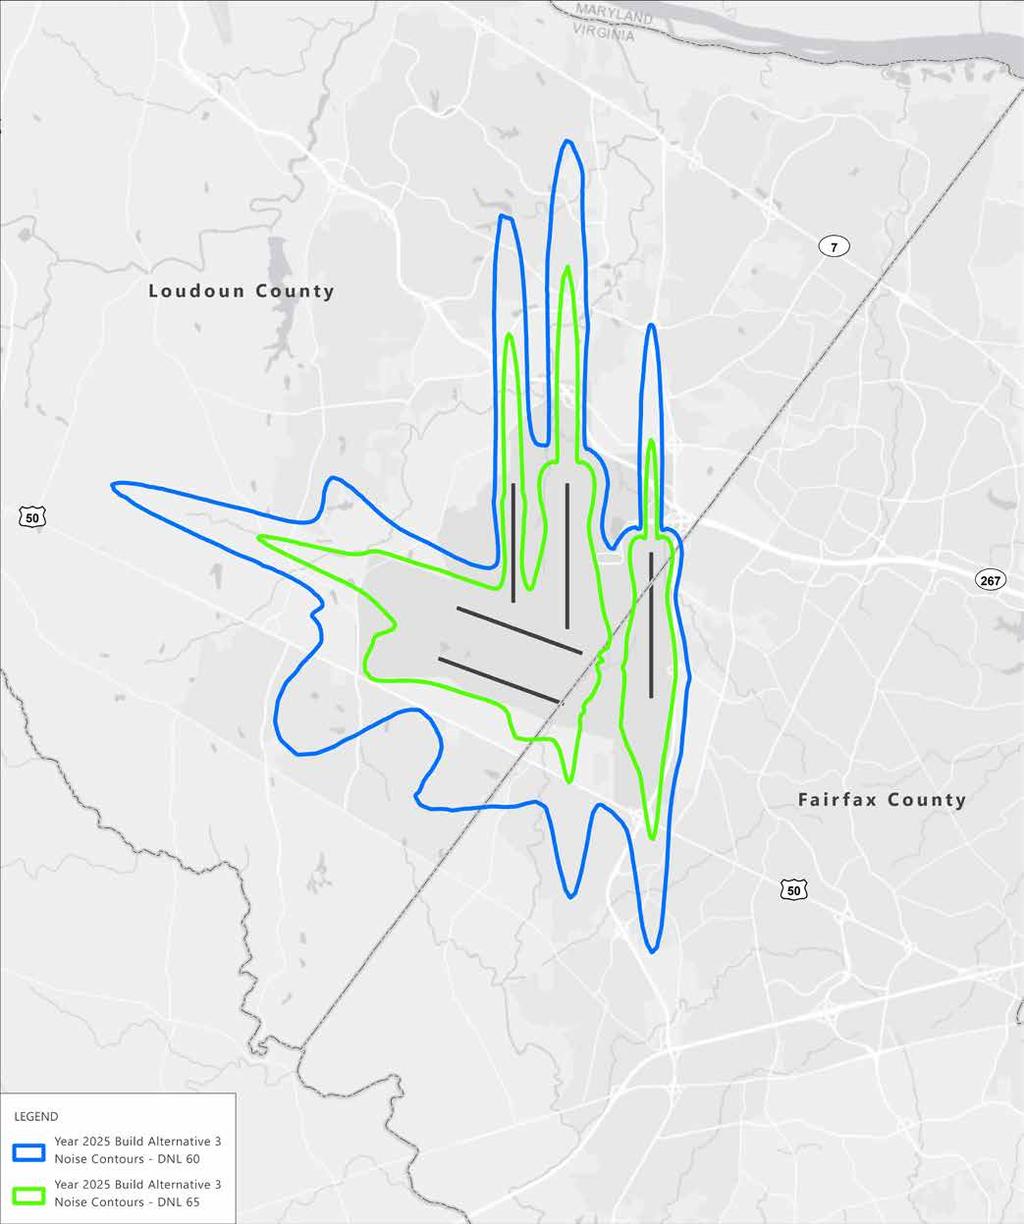 (basemap); Loudoun County Open Geospatial Data, March 2018 (noise overlay contours); Fairfax County Open Geospatial Data, March 2018 (noise overlay contours).